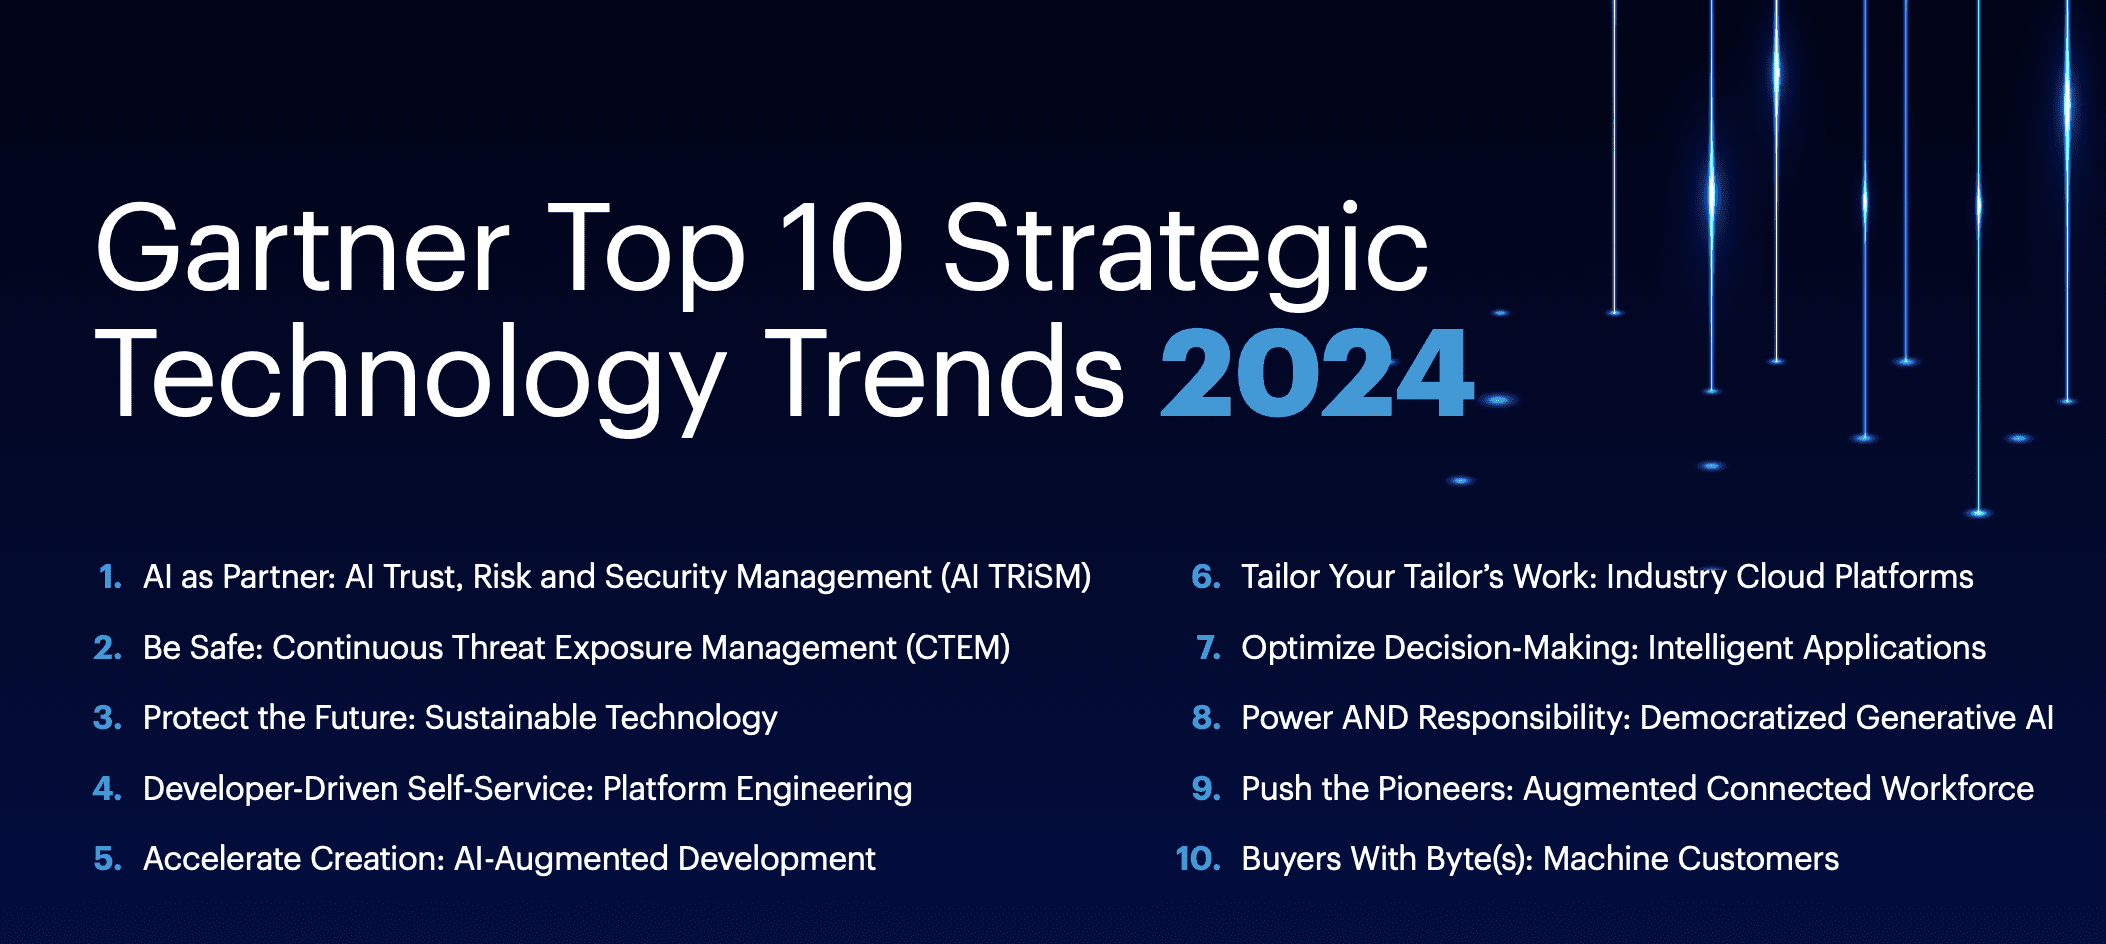 Image source: Gartner. Gartner Top 10 Strategic Technology Trends 2024 KellyOnTech